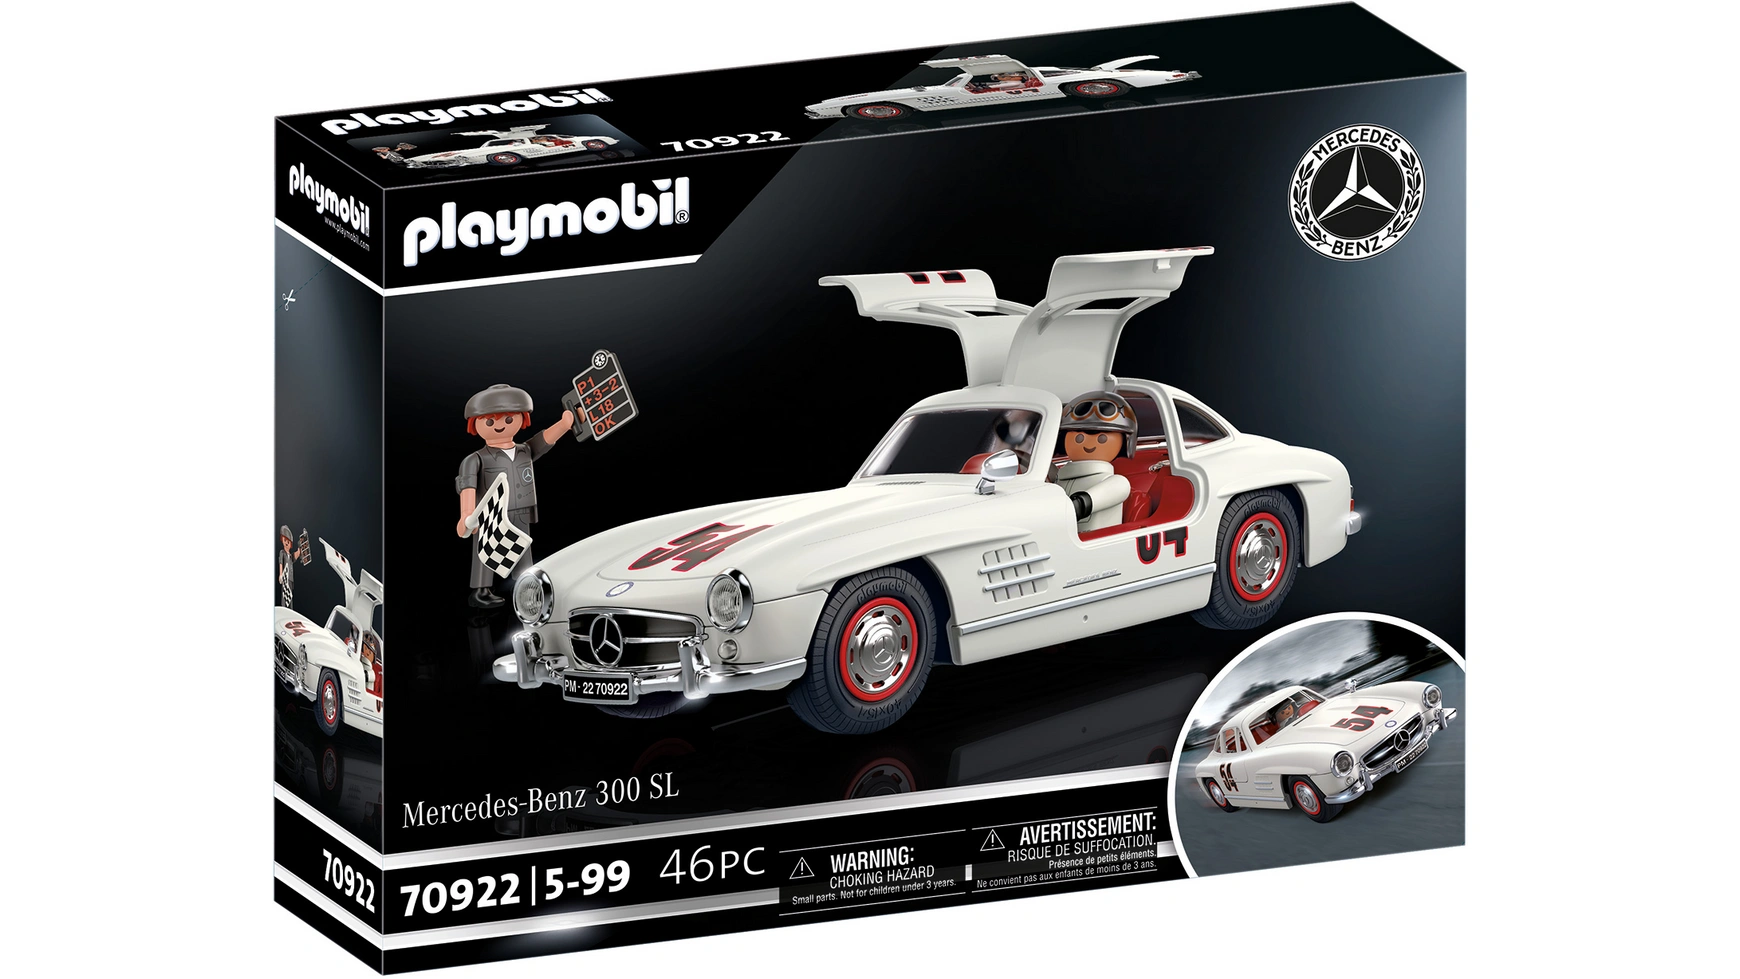 Mercedes-benz 300 sl Playmobil